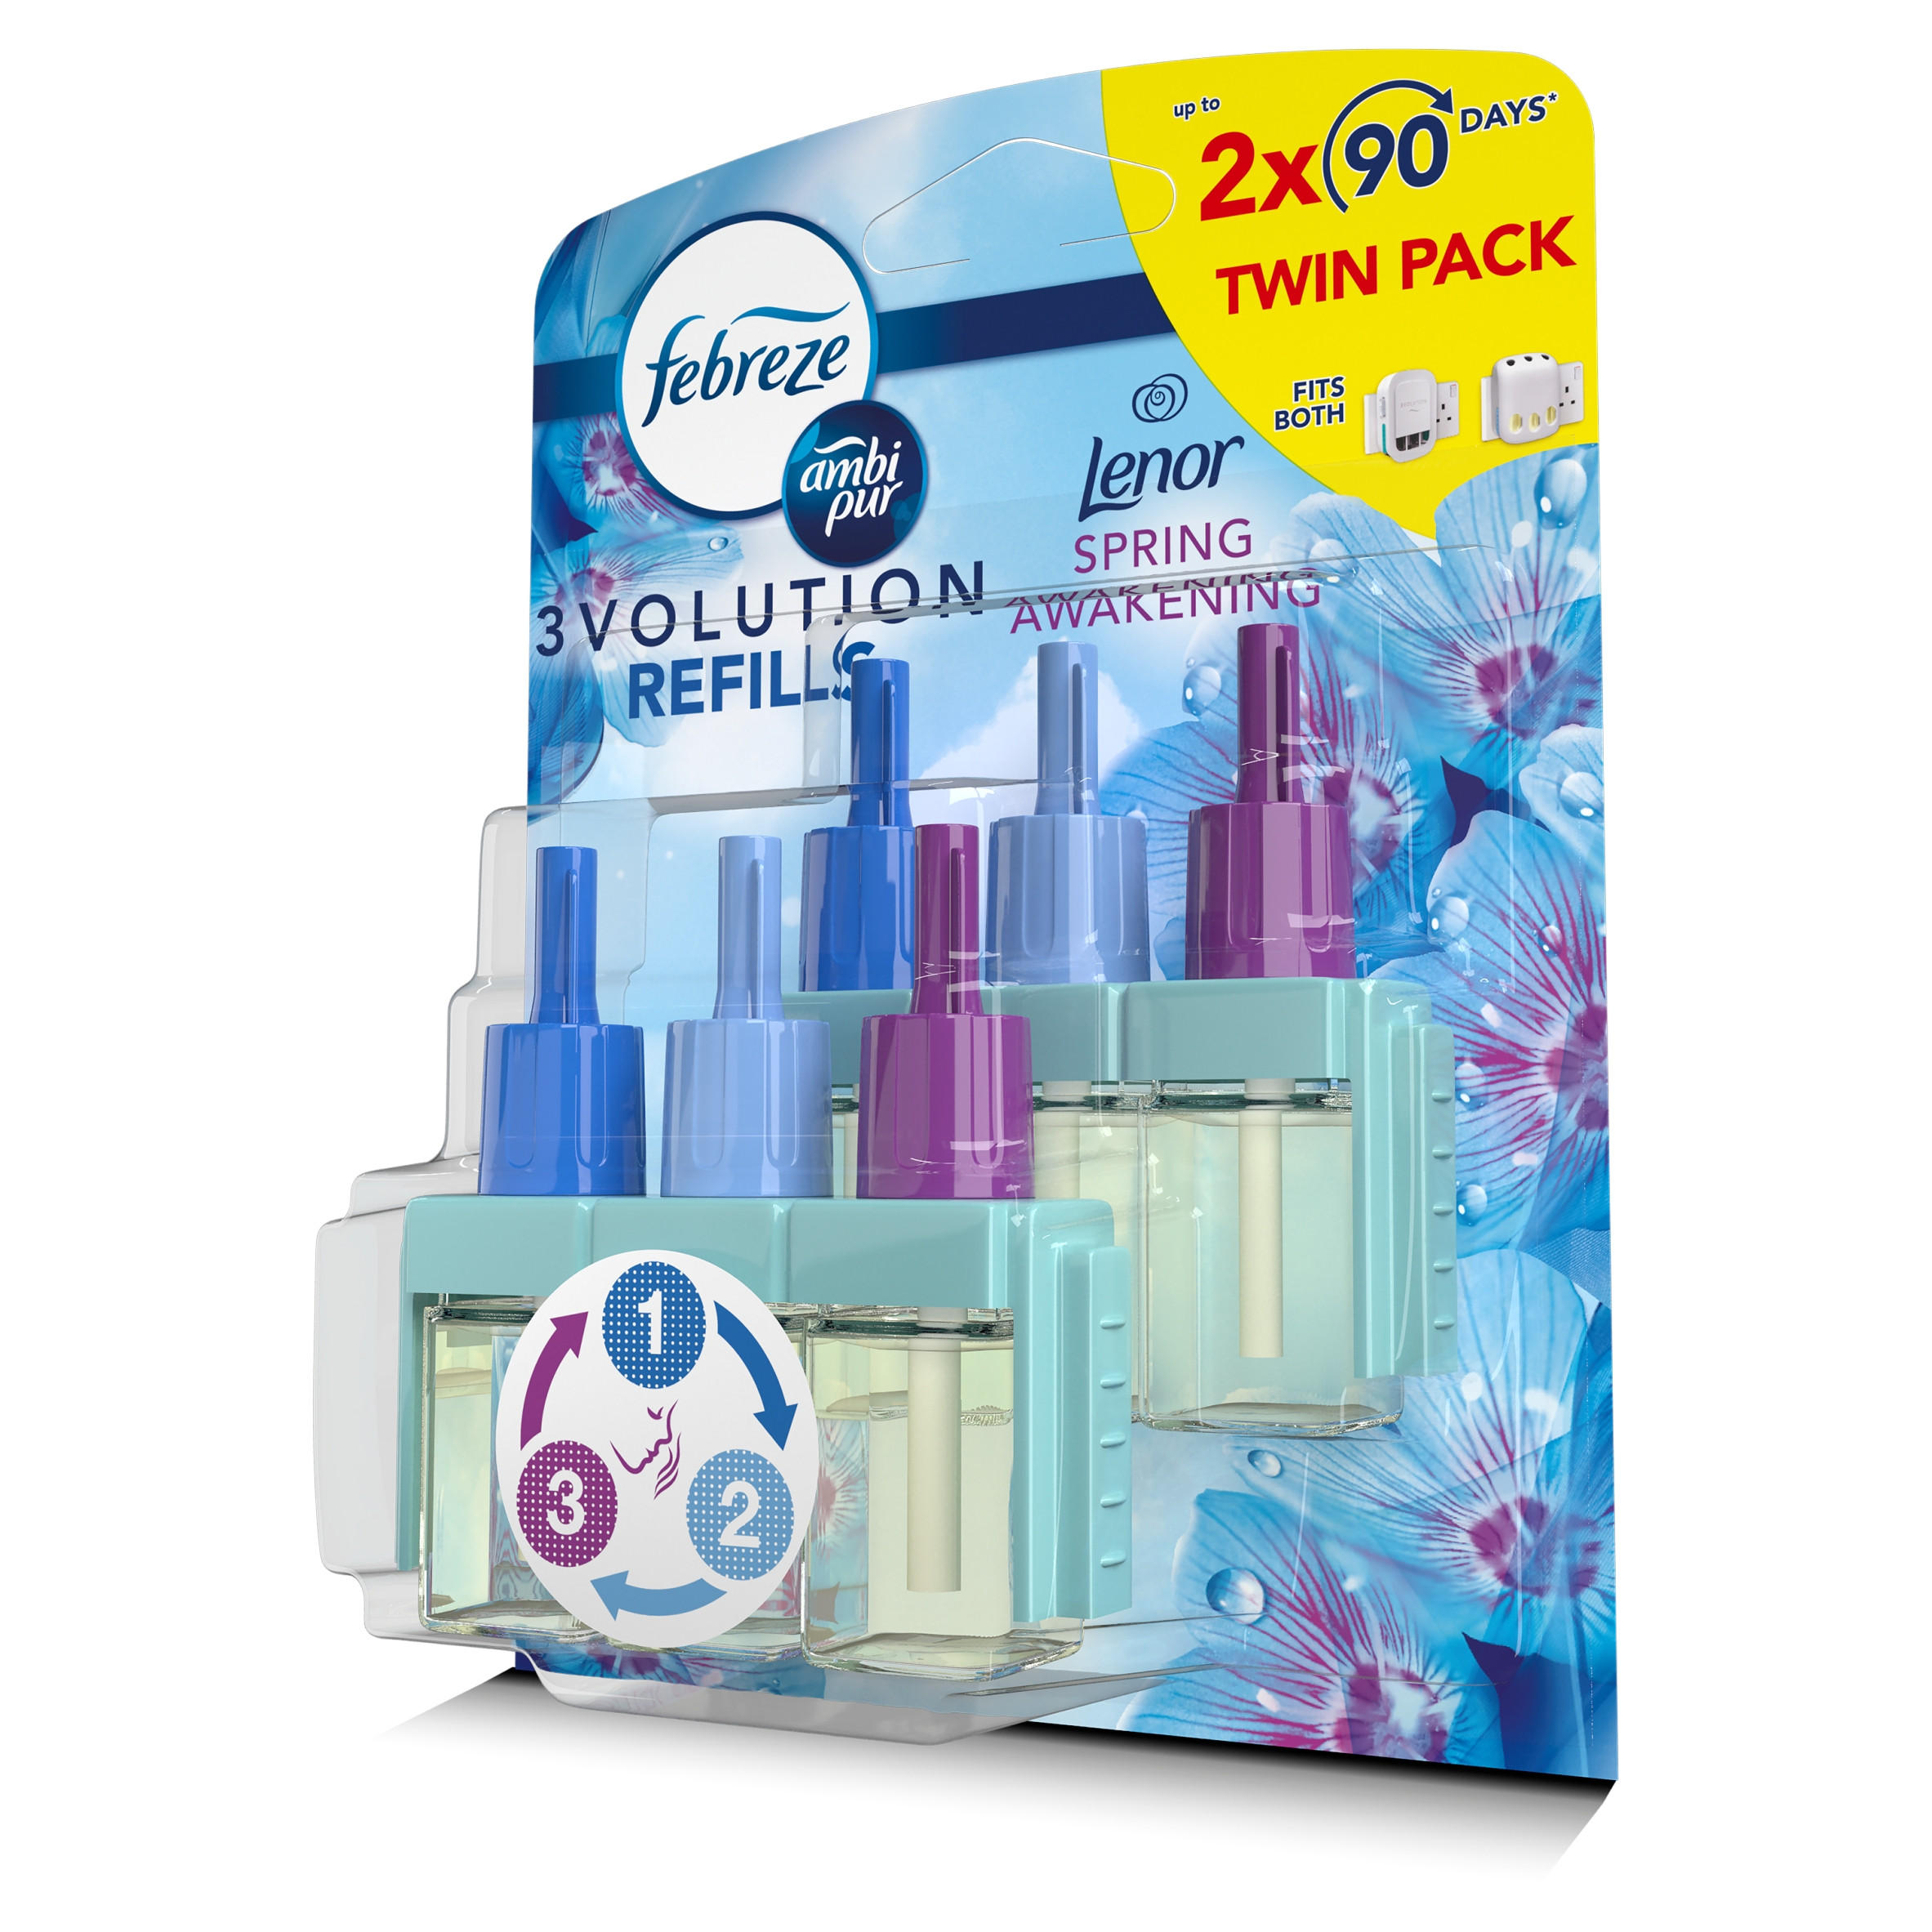 Febreze 3Volution Air Freshener Plug In Refill Spring Awakening Twin Pack  2x20ML, Home Accessories